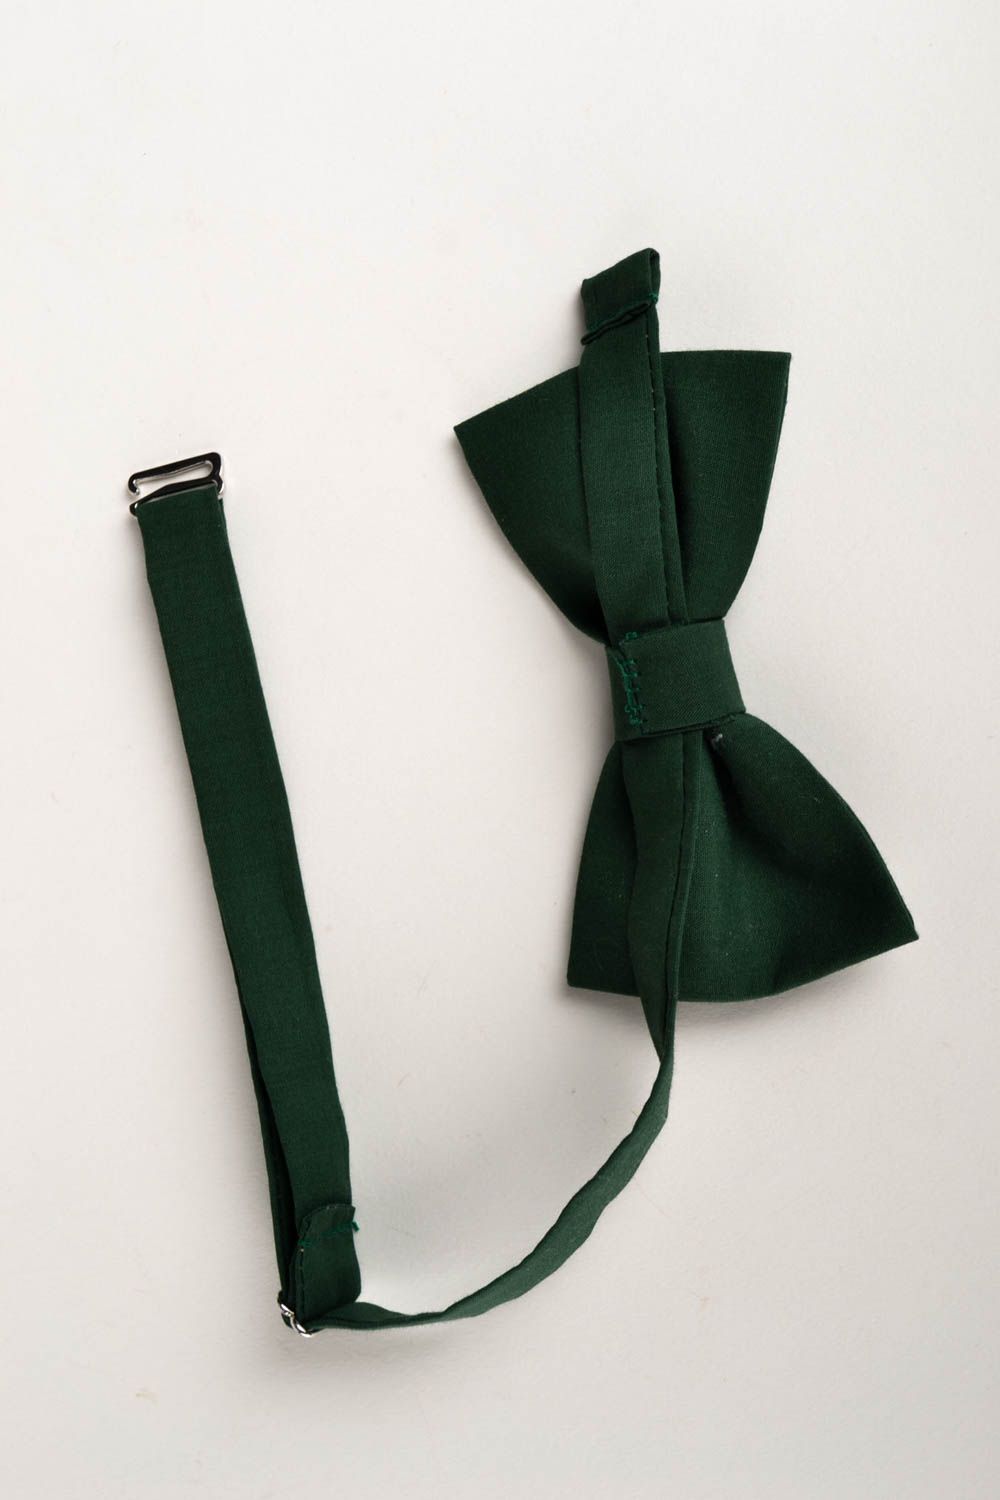 Corbata de lazo artesanal pajarita moderna en color verde accesorio unisex foto 2